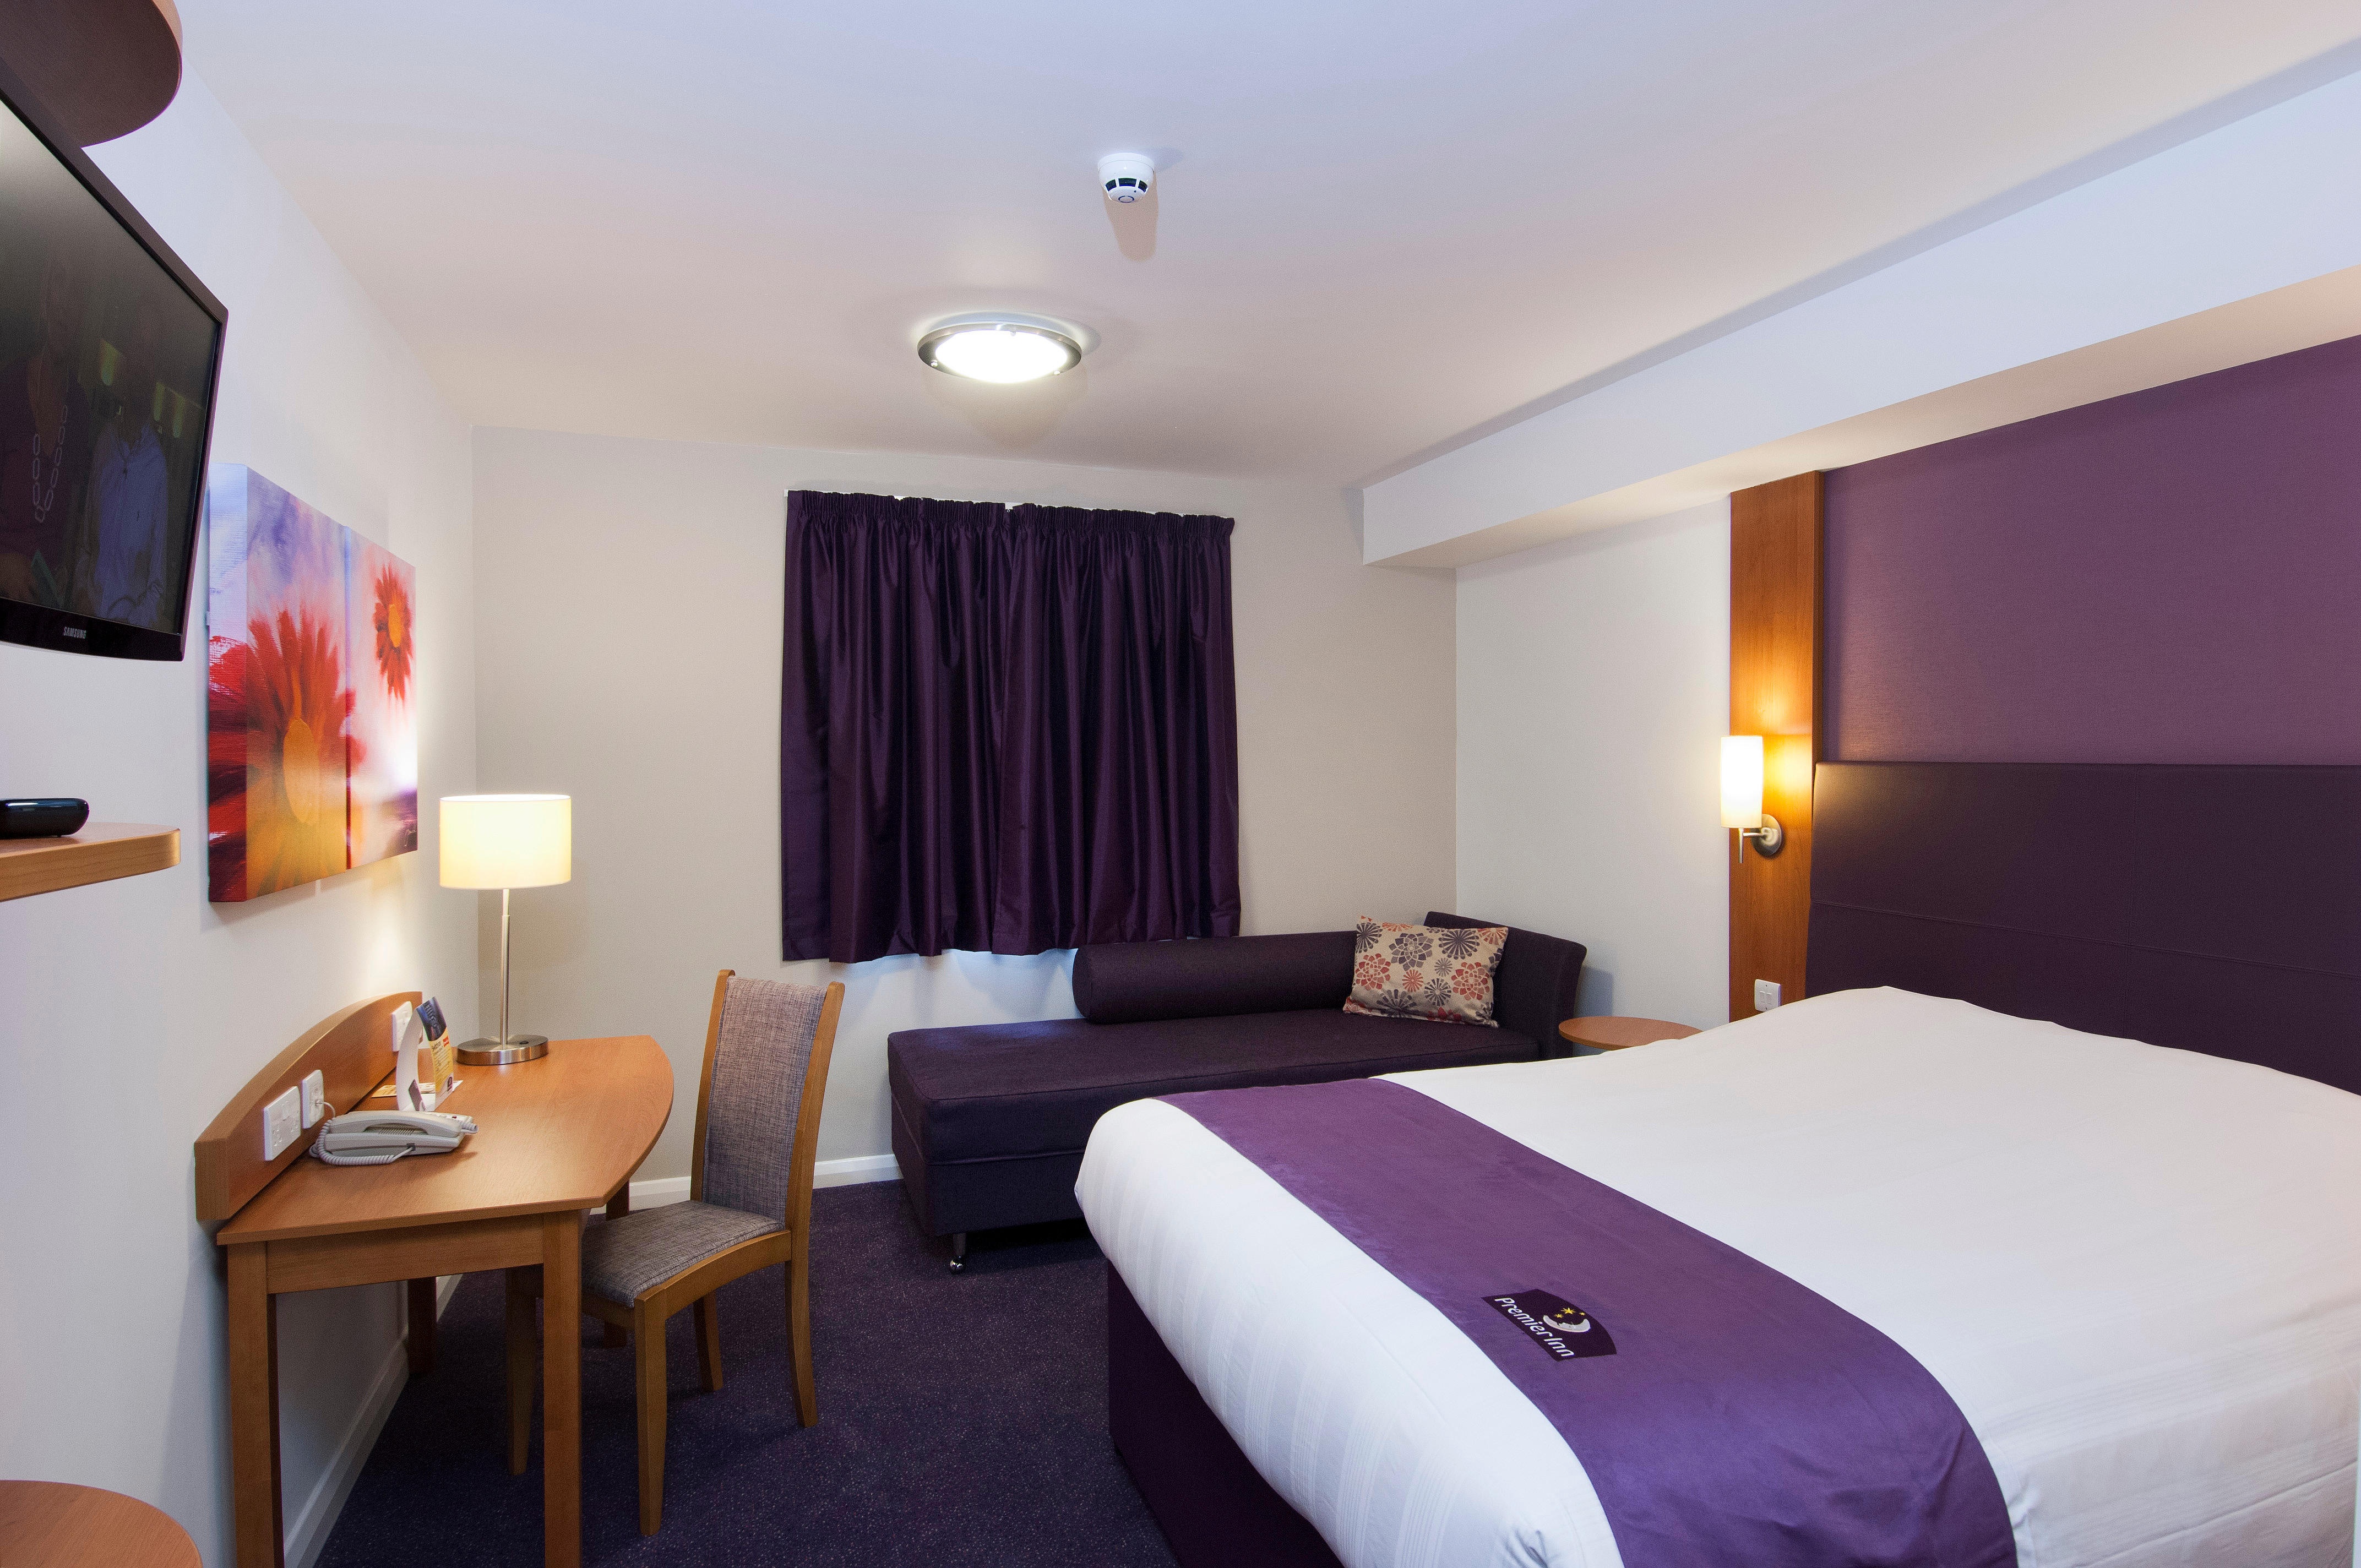 Premier Inn bedroom Premier Inn London Richmond hotel London 03333 219261